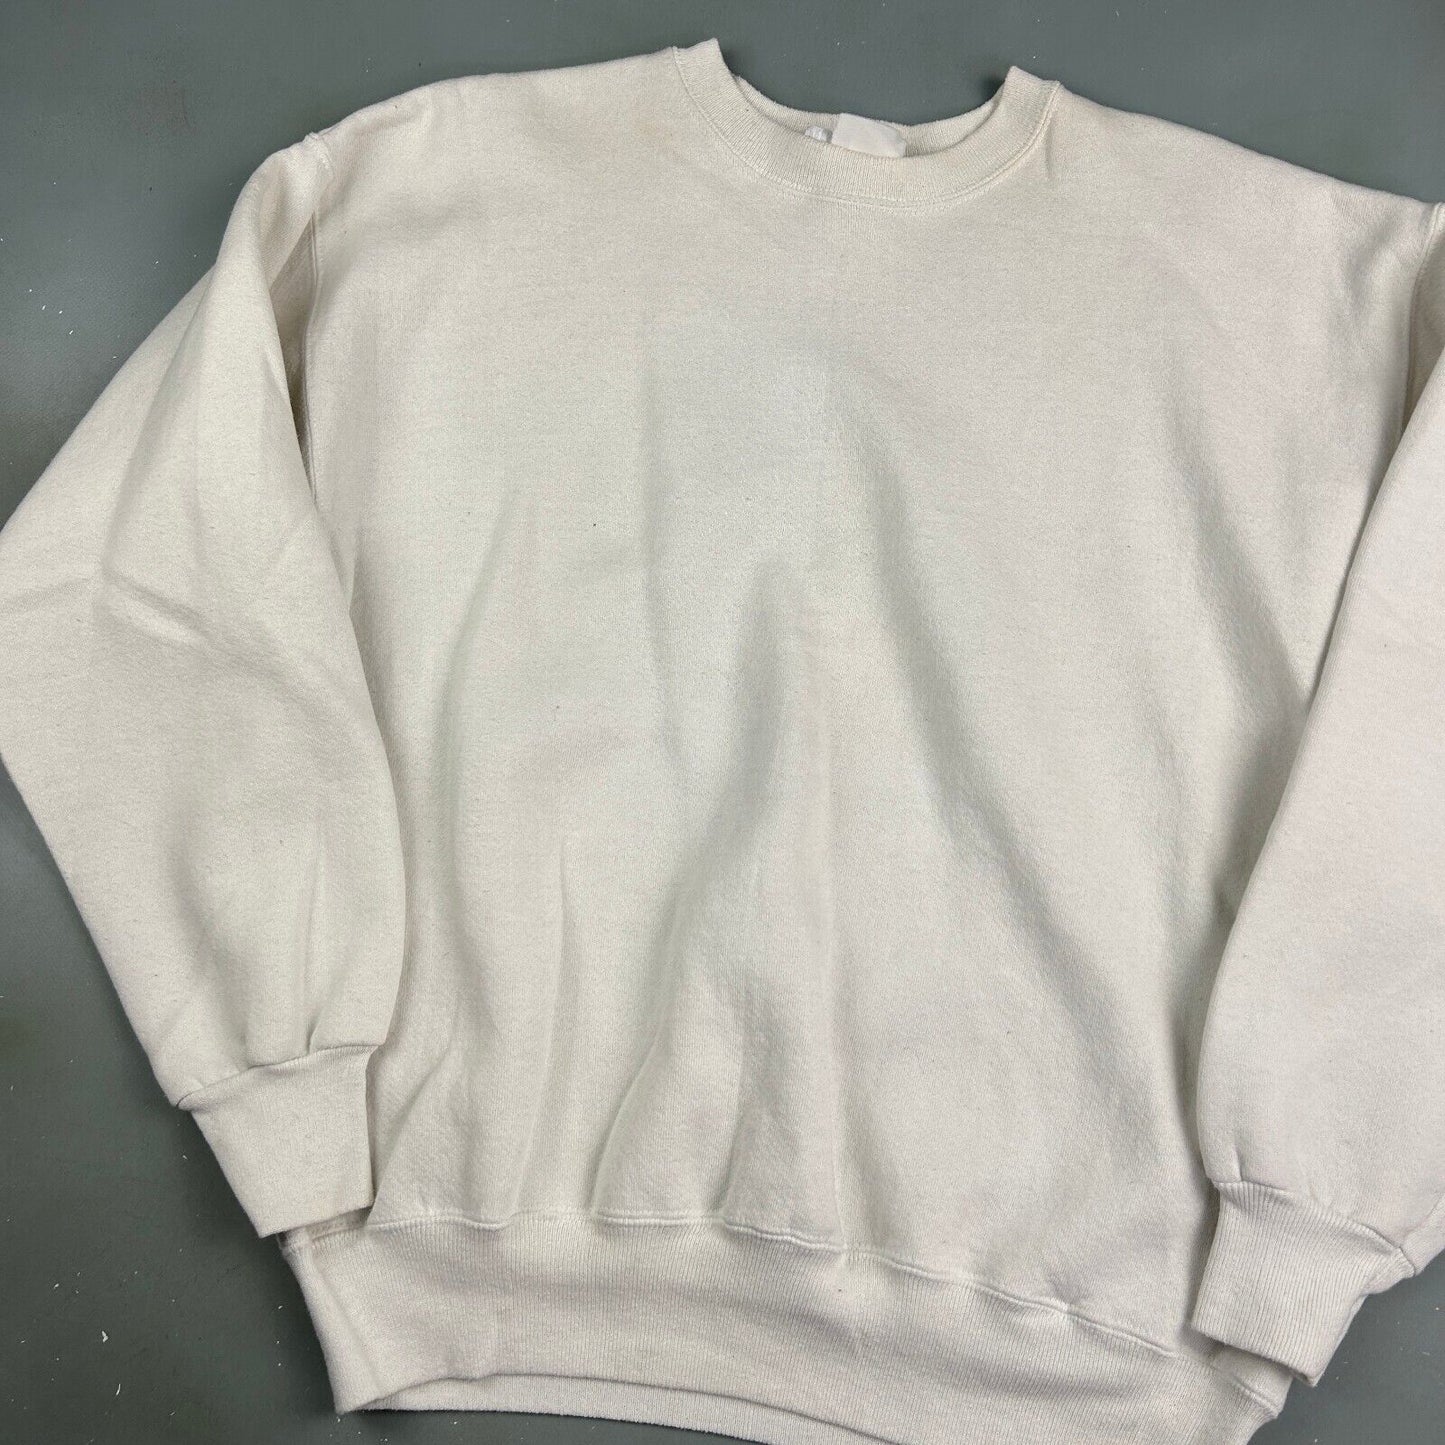 VINTAGE 90s Hanes Blank White Crewneck Sweater sz Medium Adult